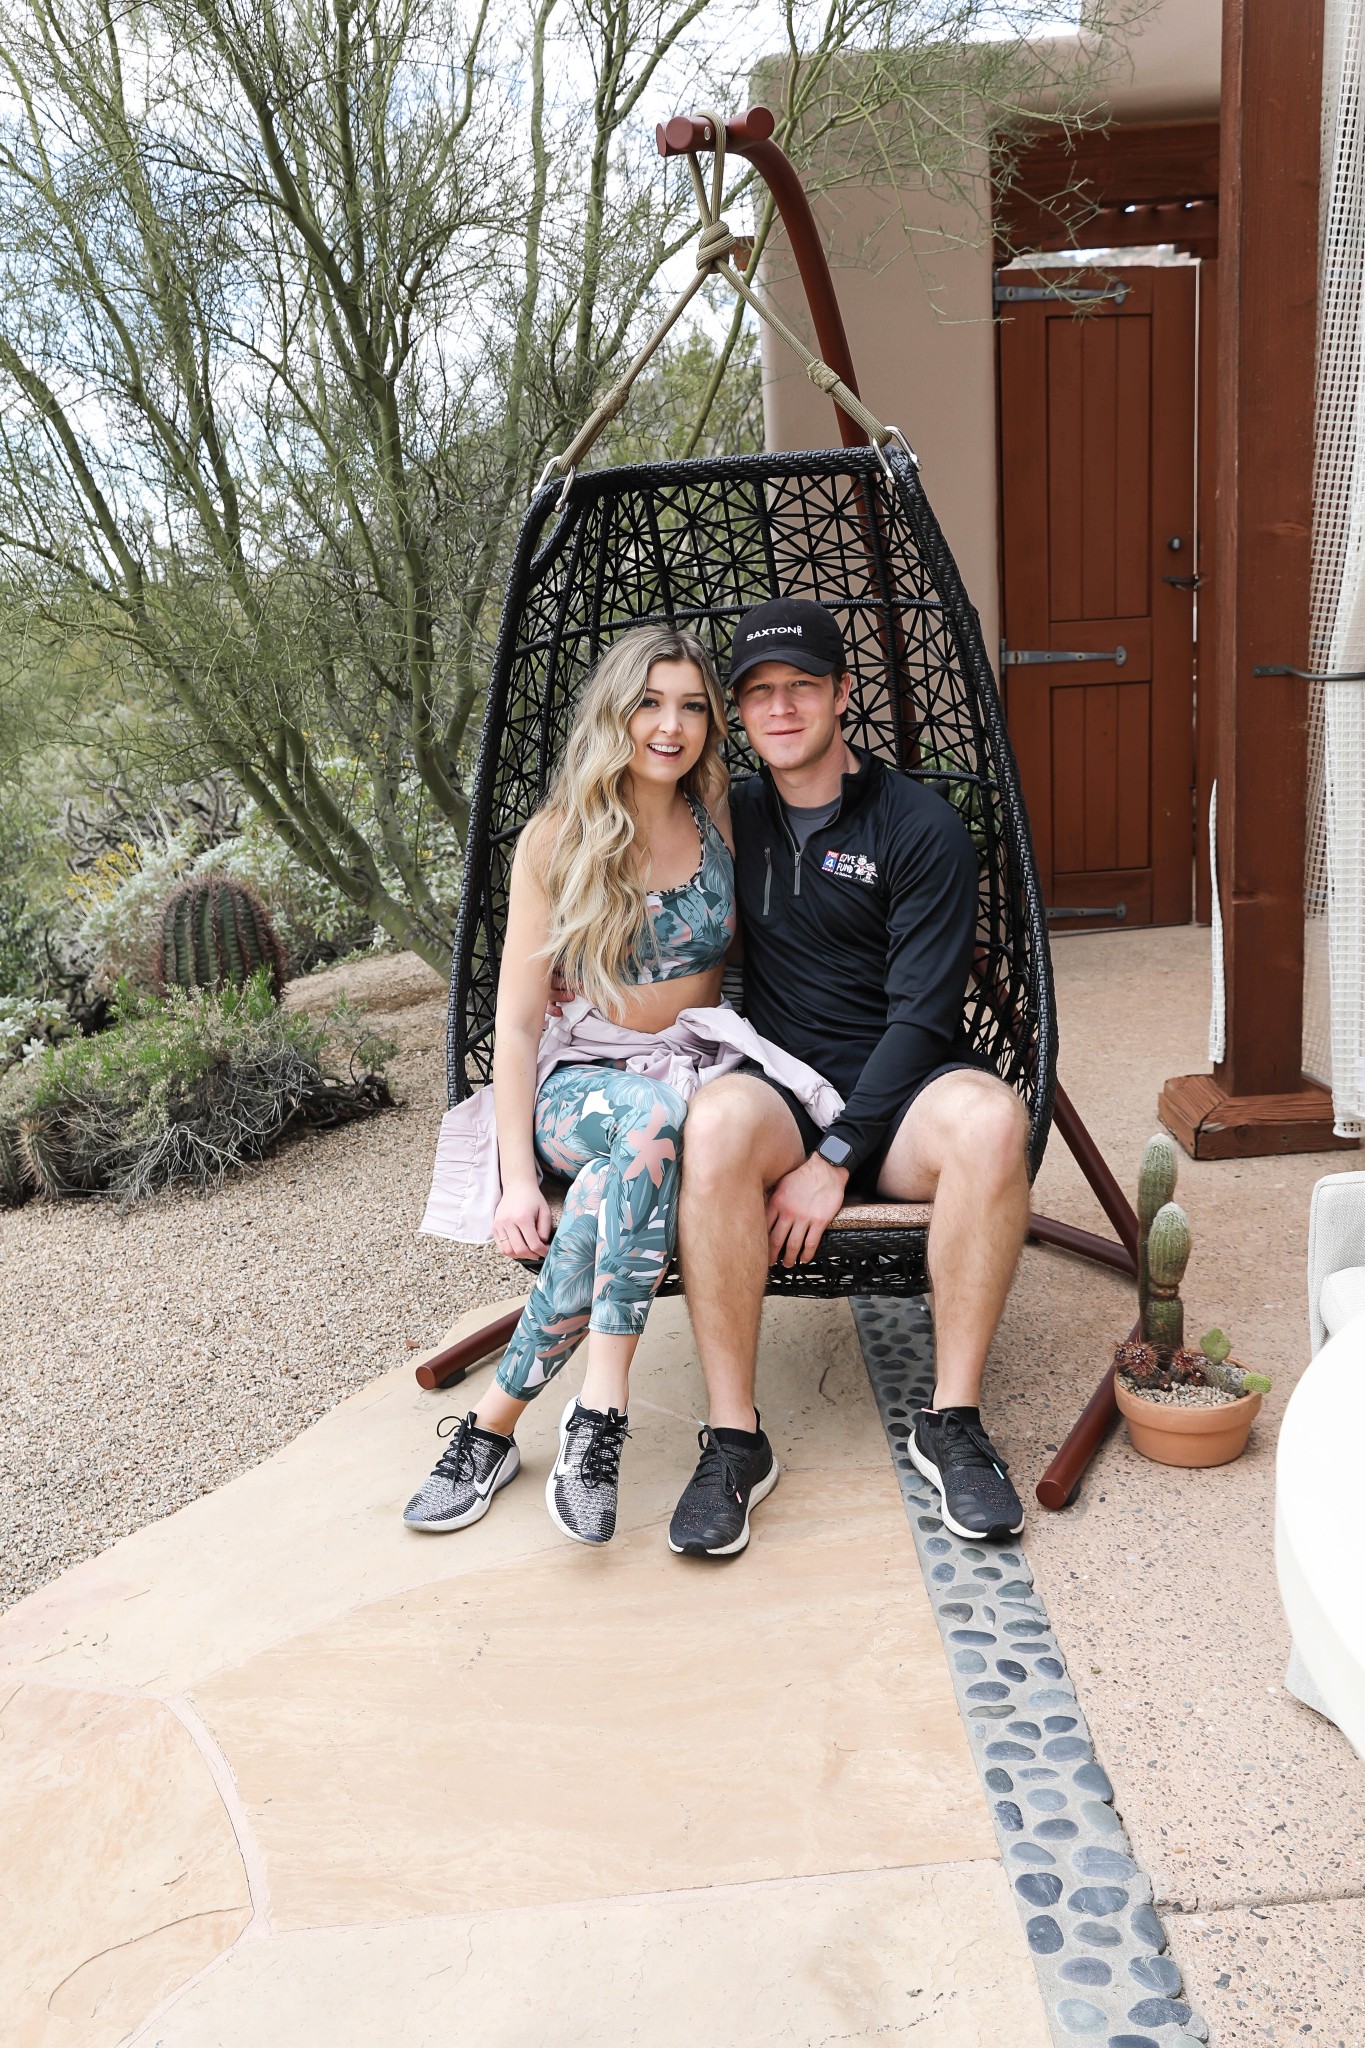 Cameron boyfriend girlfriend scottsdale arizona couples trip four seasons fashion blog daily dose of charm lauren lindmark 